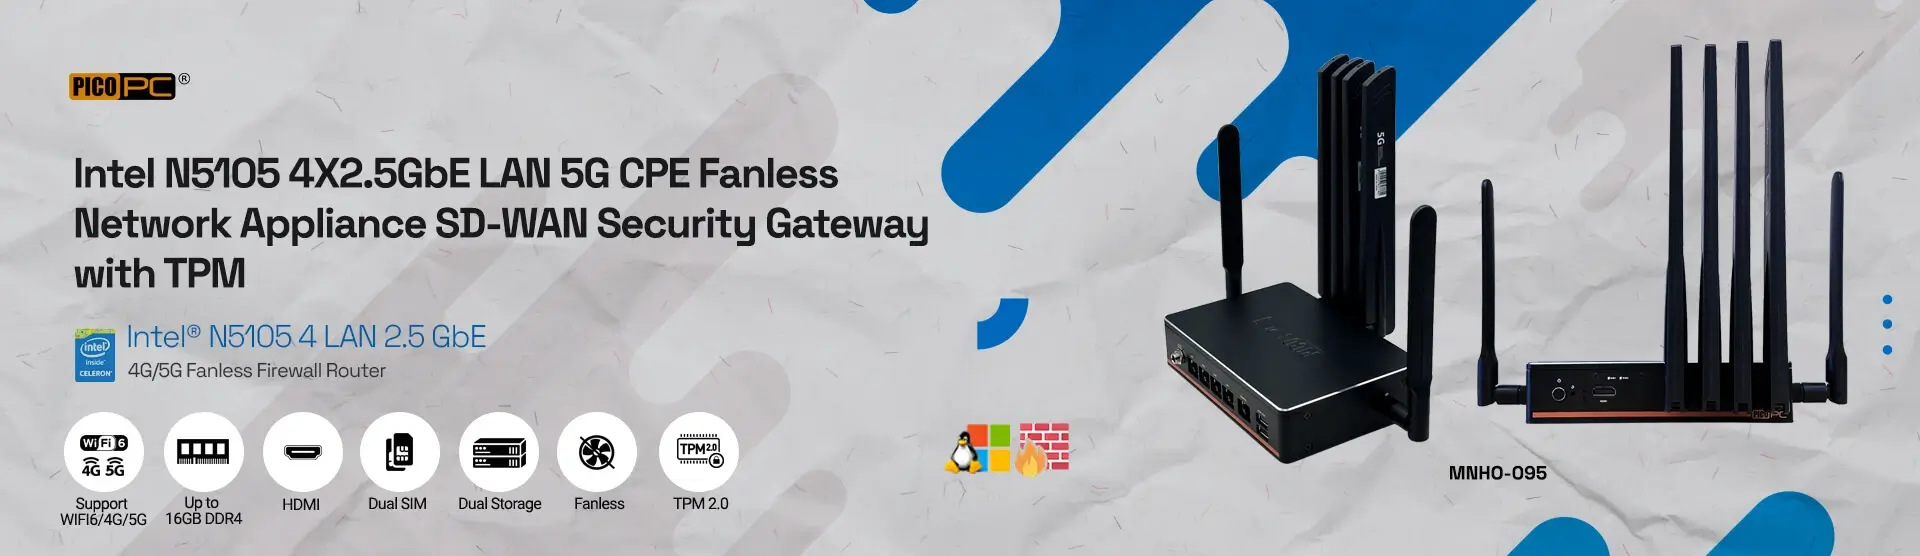 Intel N5105 4 LAN 2.5GbE 5G CPE Fanless Network Appliance SD-WAN Security Gateway with TPM
